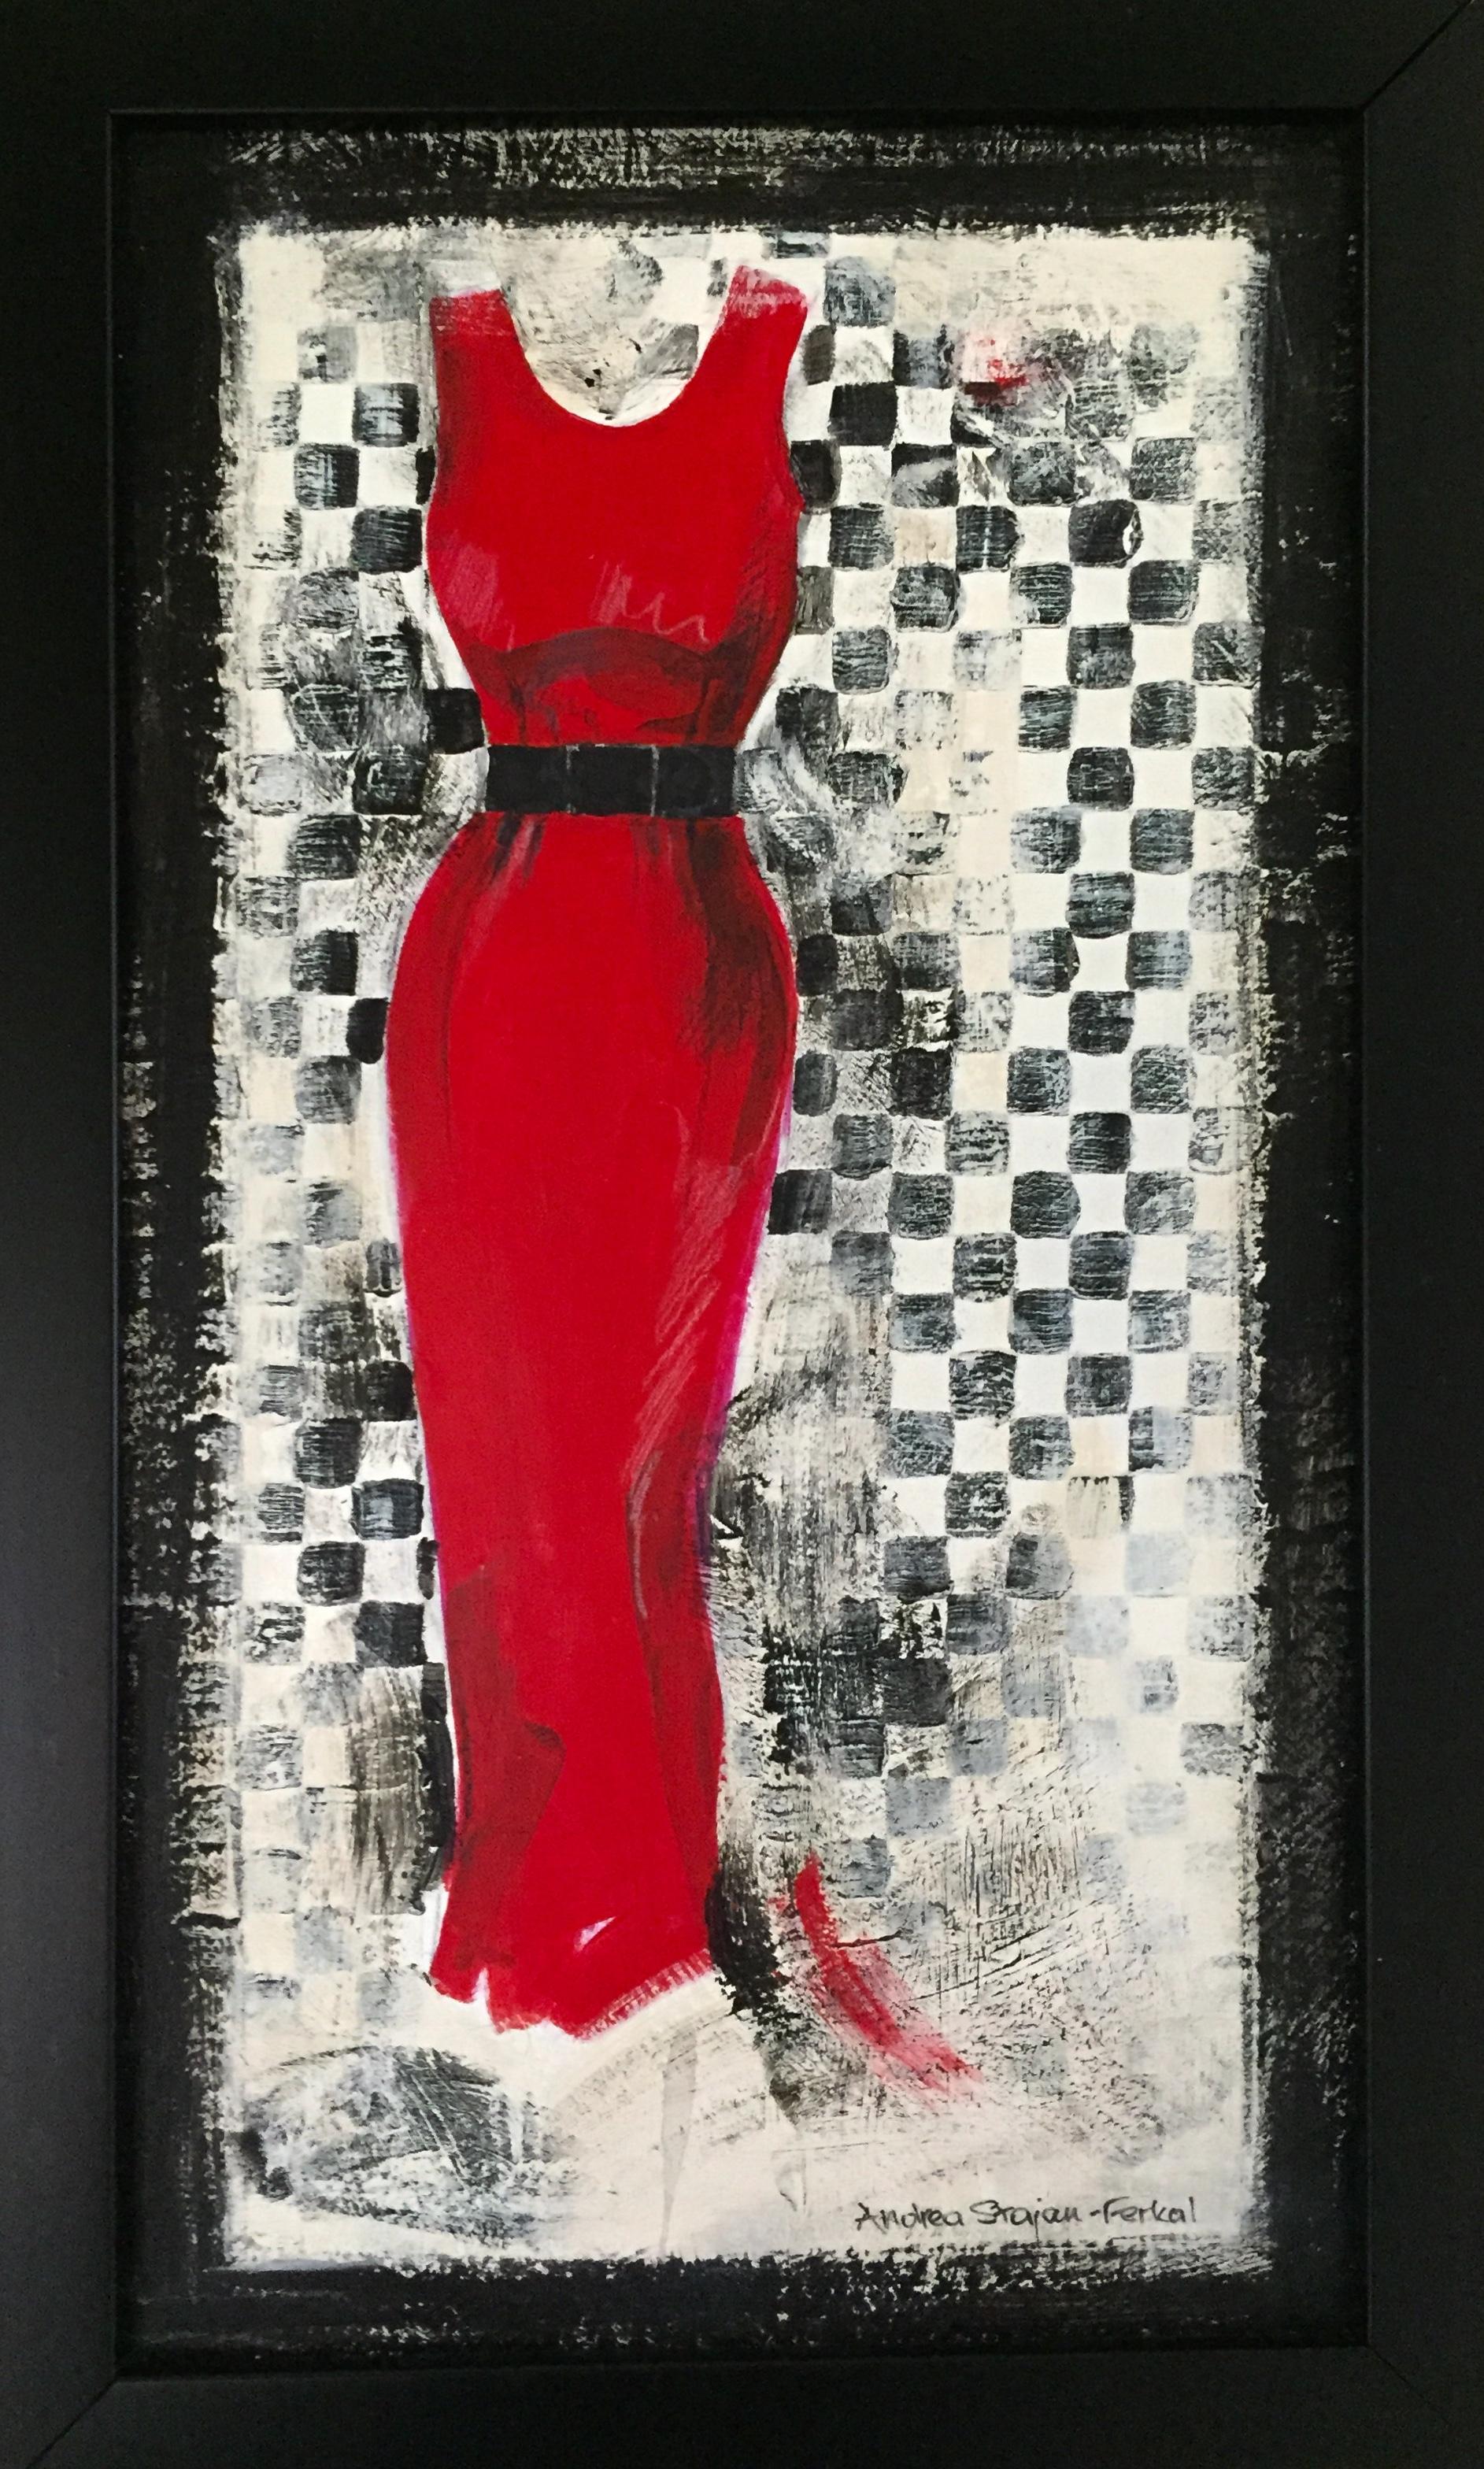 Going Retro - 2 - 9.5"x15.5", Red, Vintage Inspired Dress, Original Art